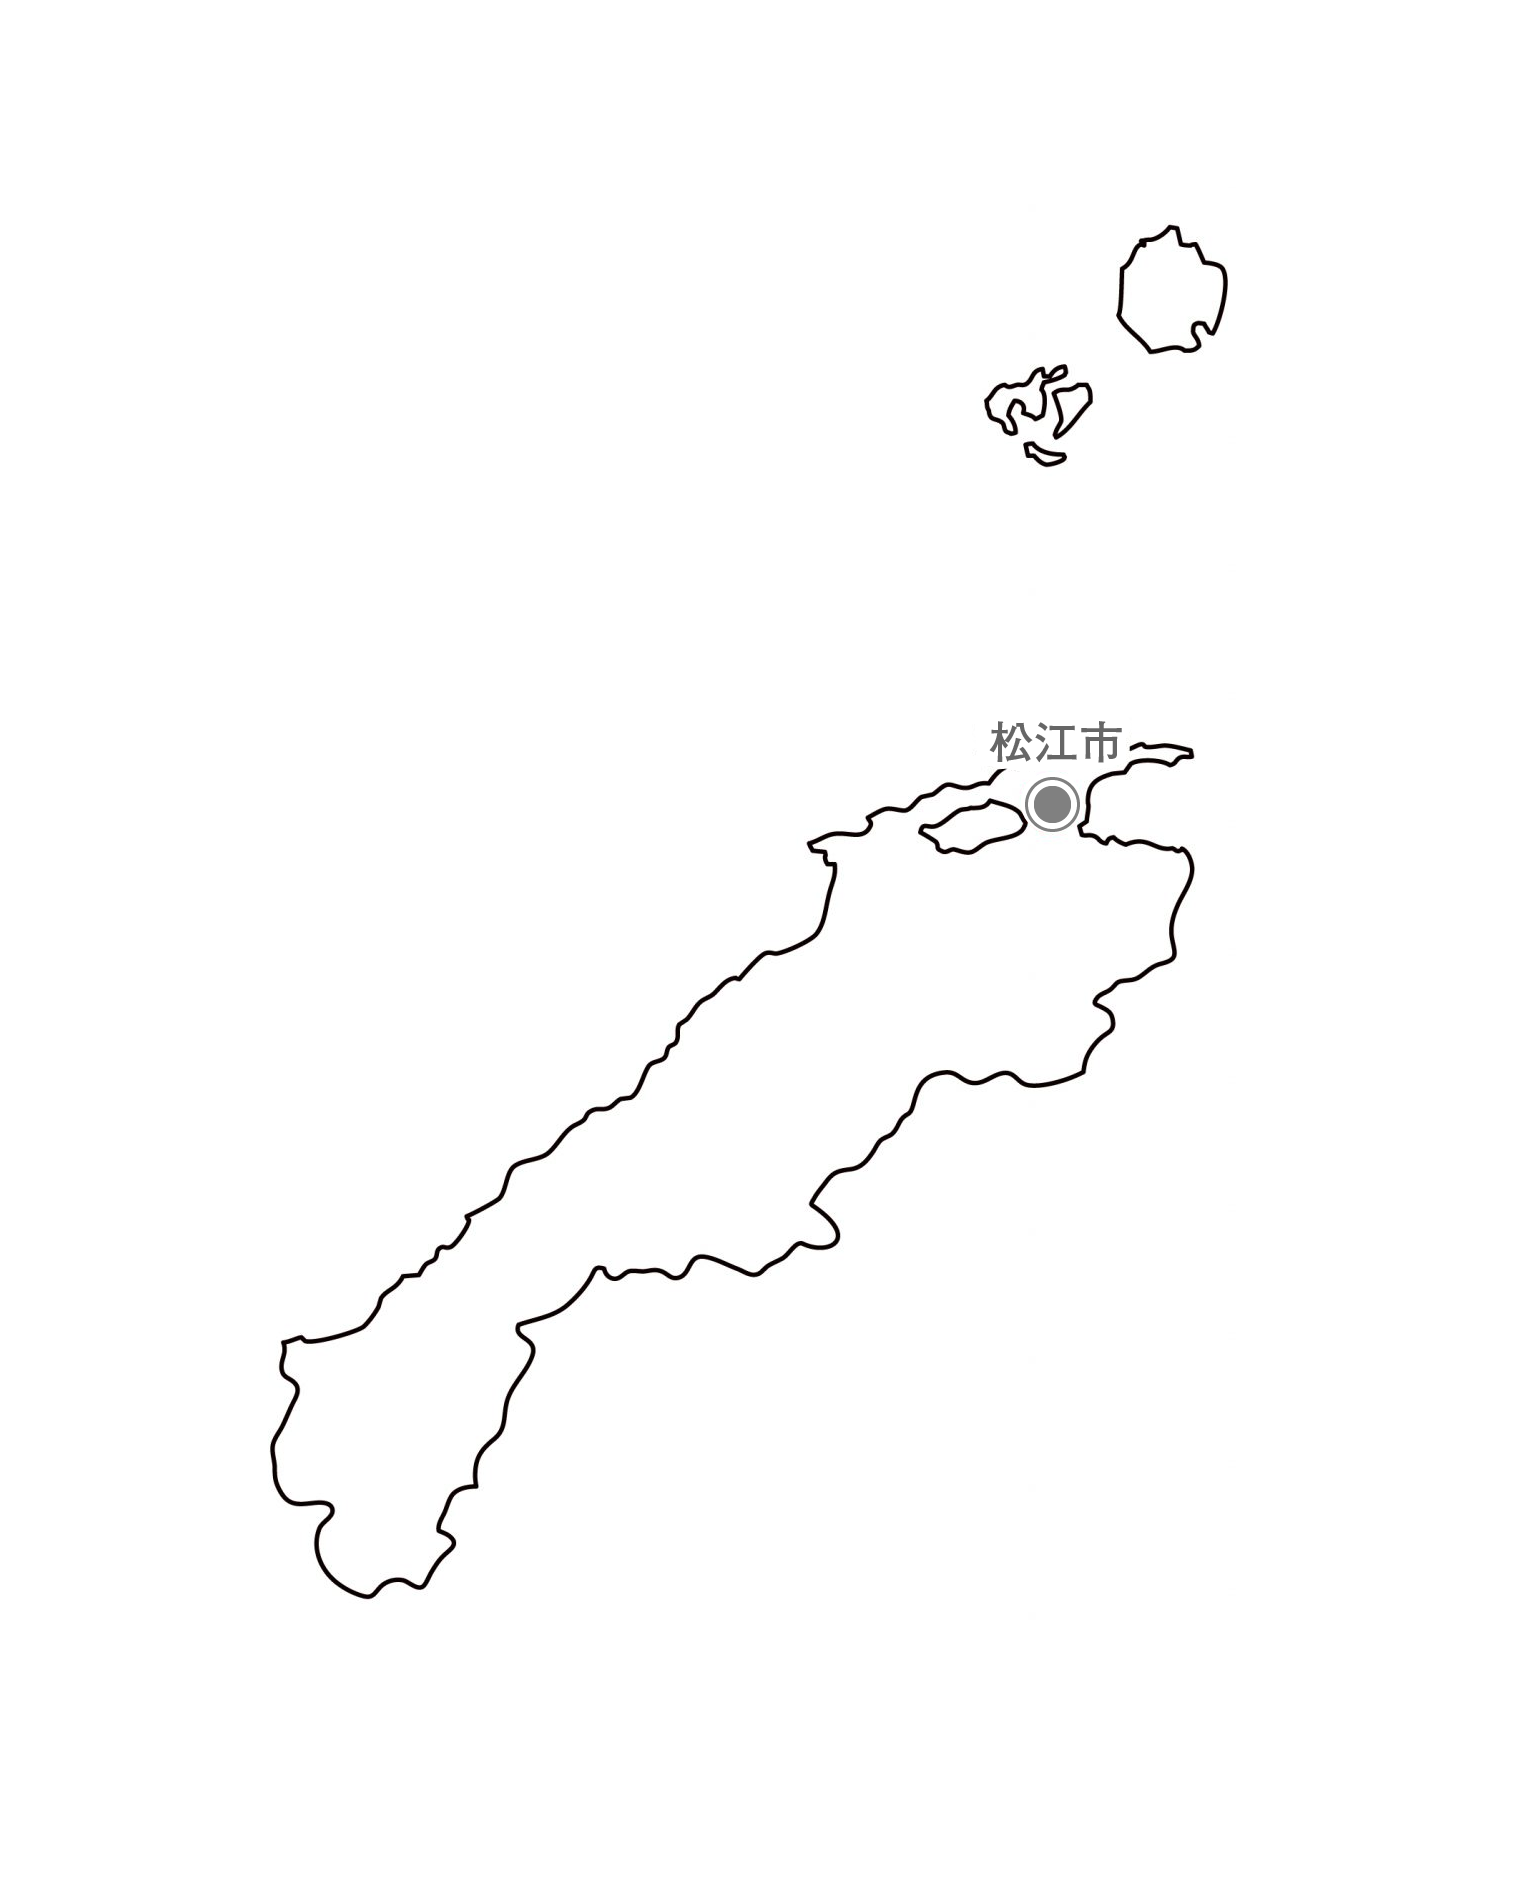 [白地図]島根県・都道府県名・県庁所在地あり